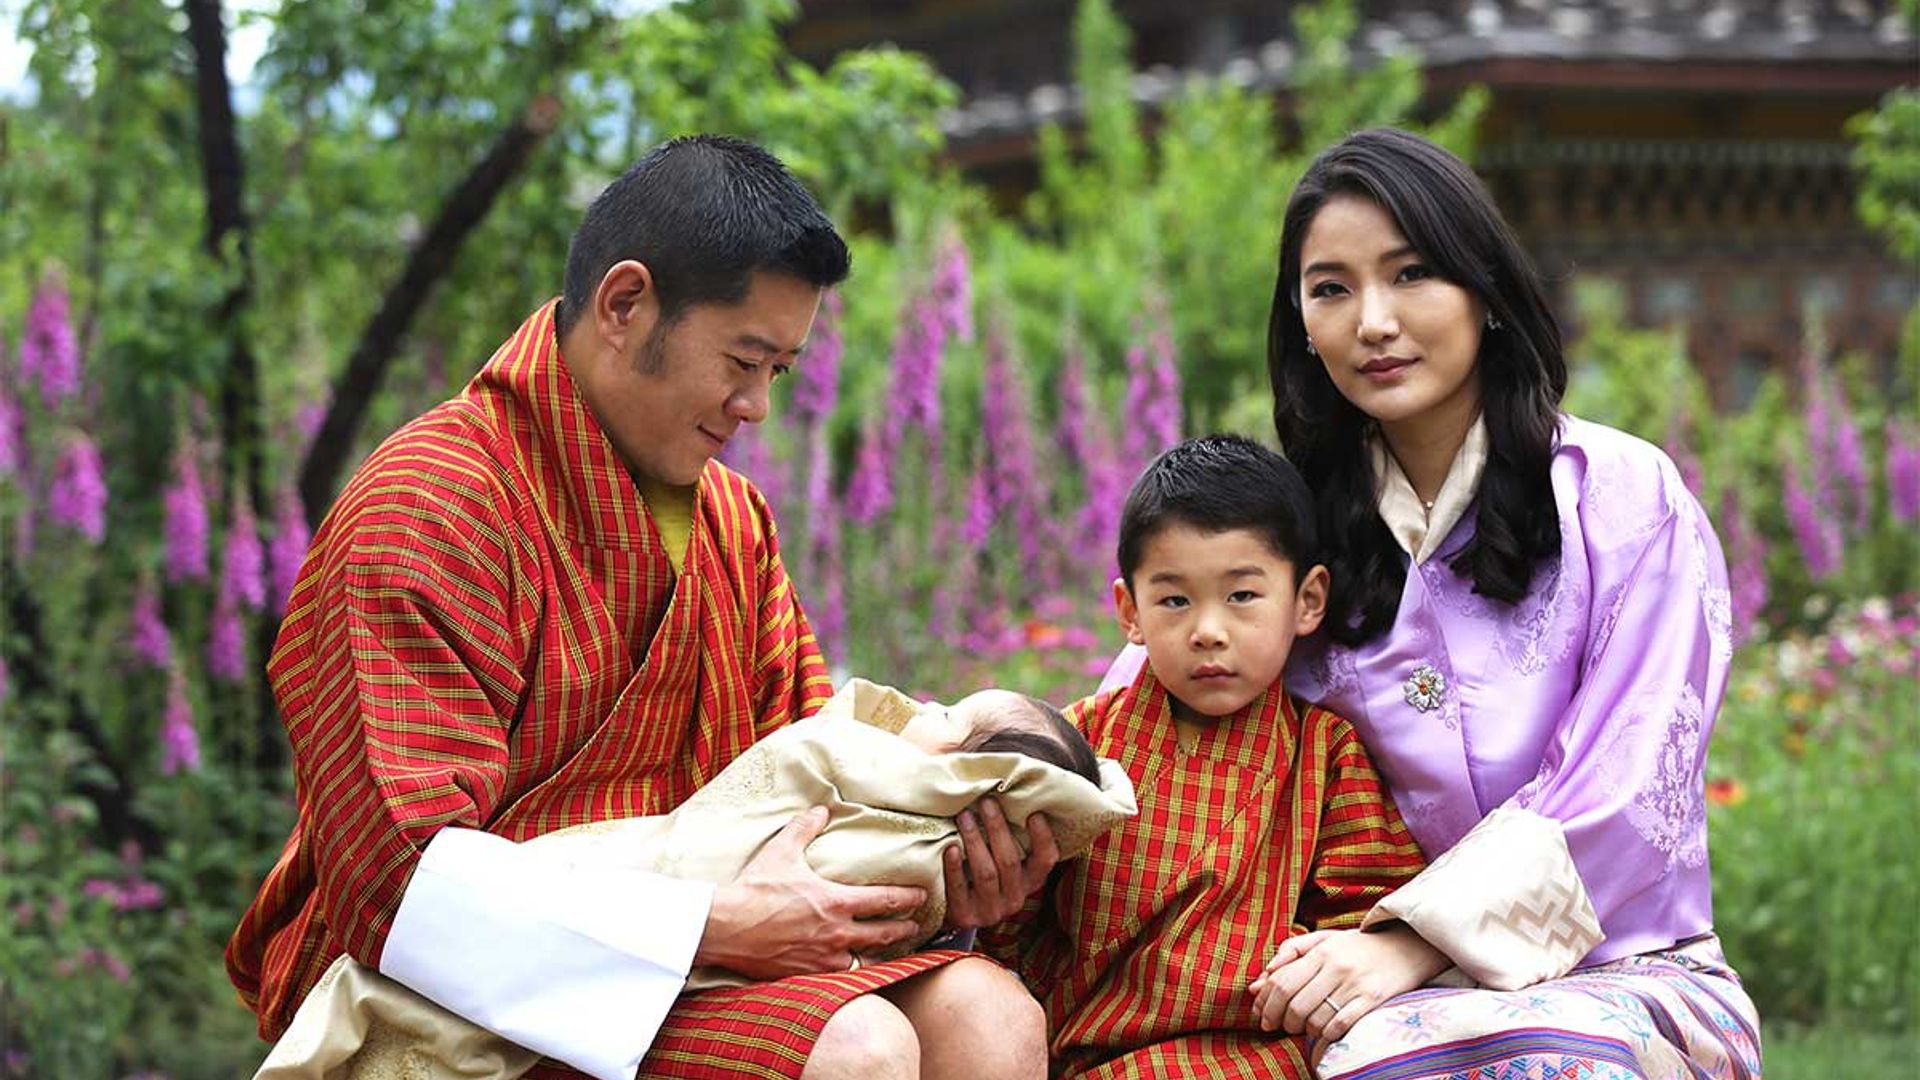 bhutan royal baby